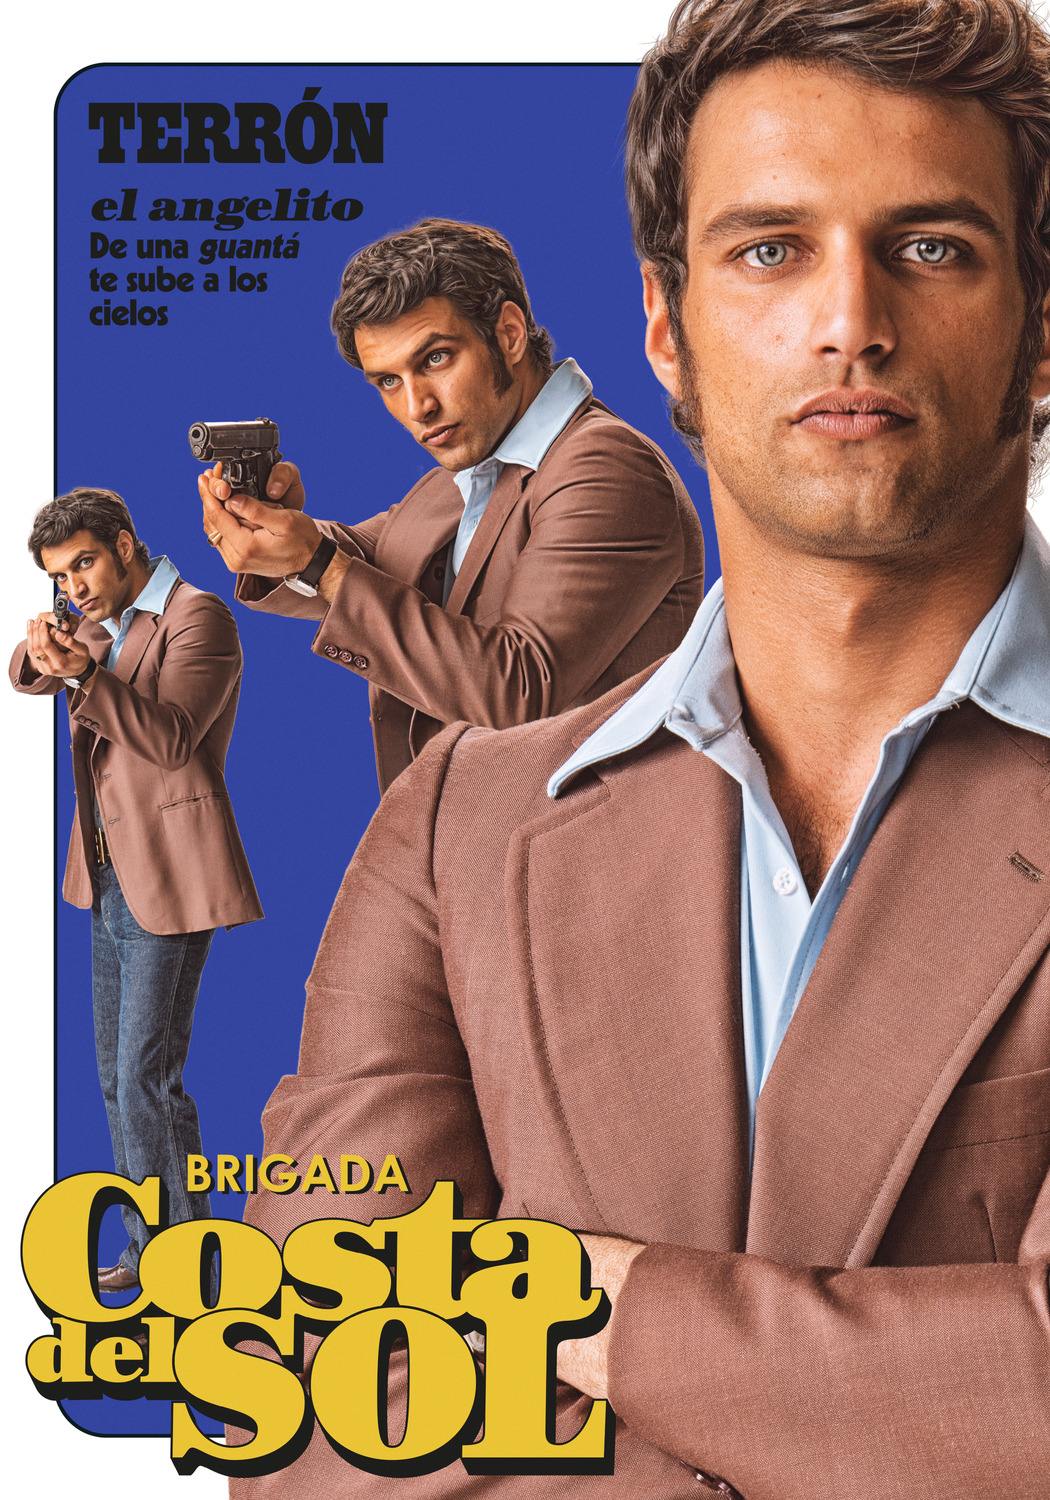 Extra Large TV Poster Image for Brigada Costa del Sol (#7 of 23)